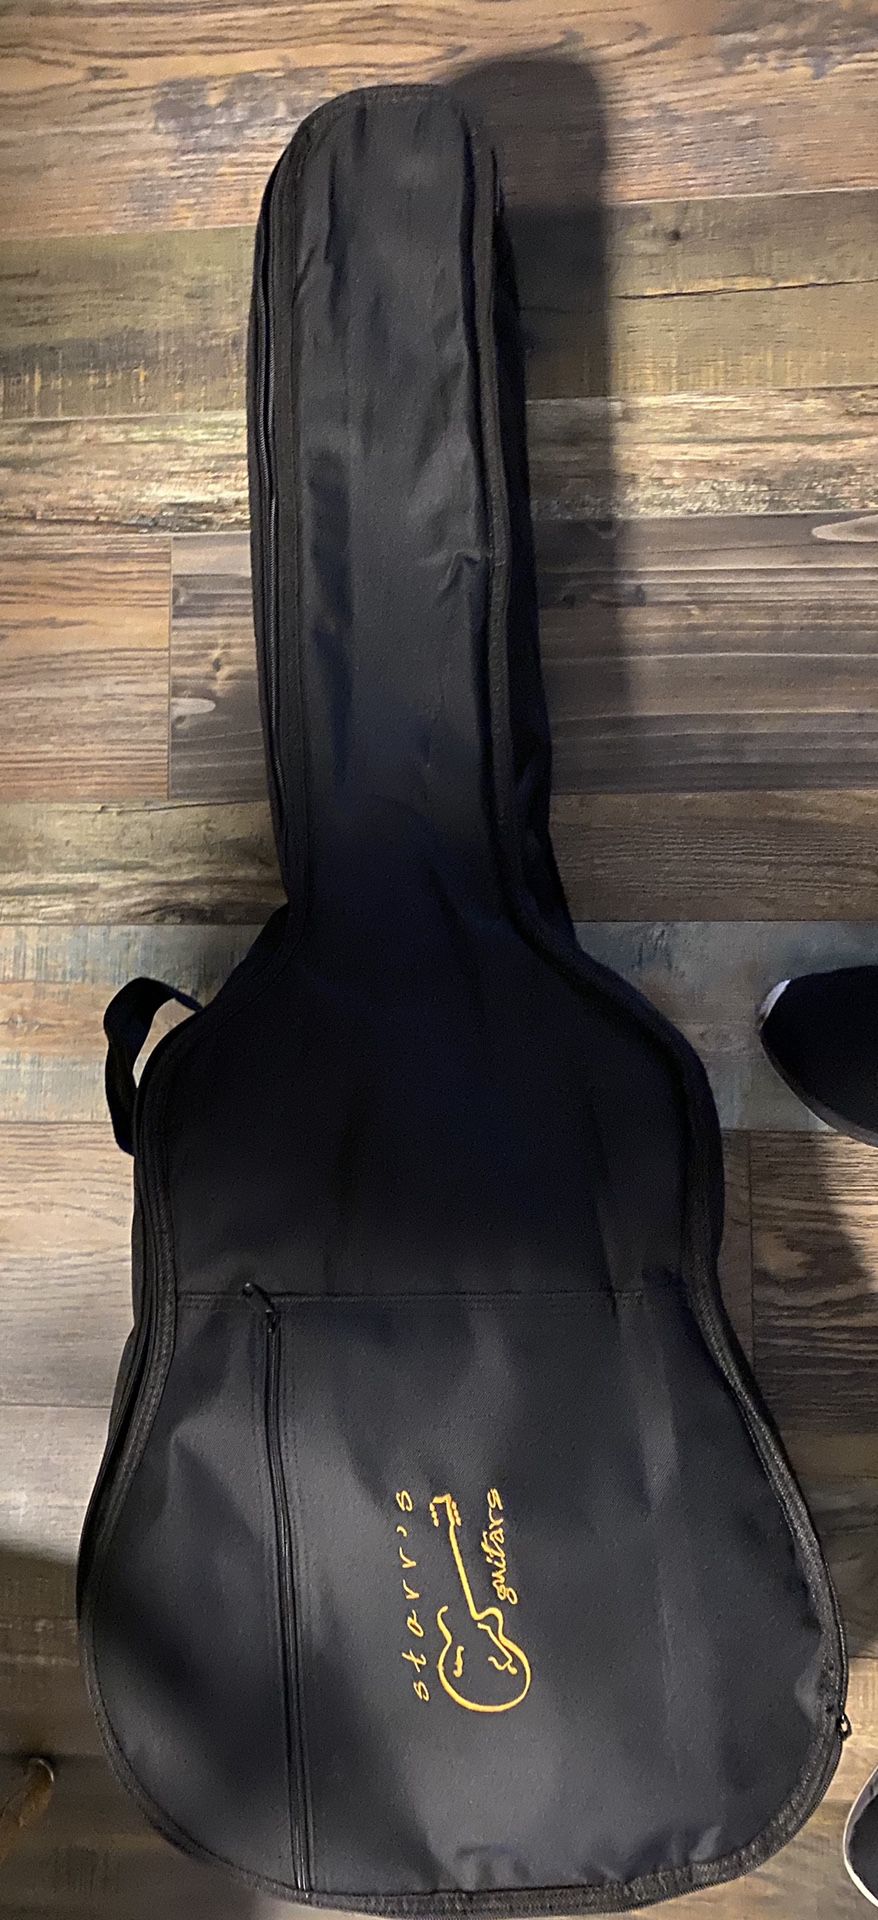 Pending: Guitar Gig Bag with backpack strap